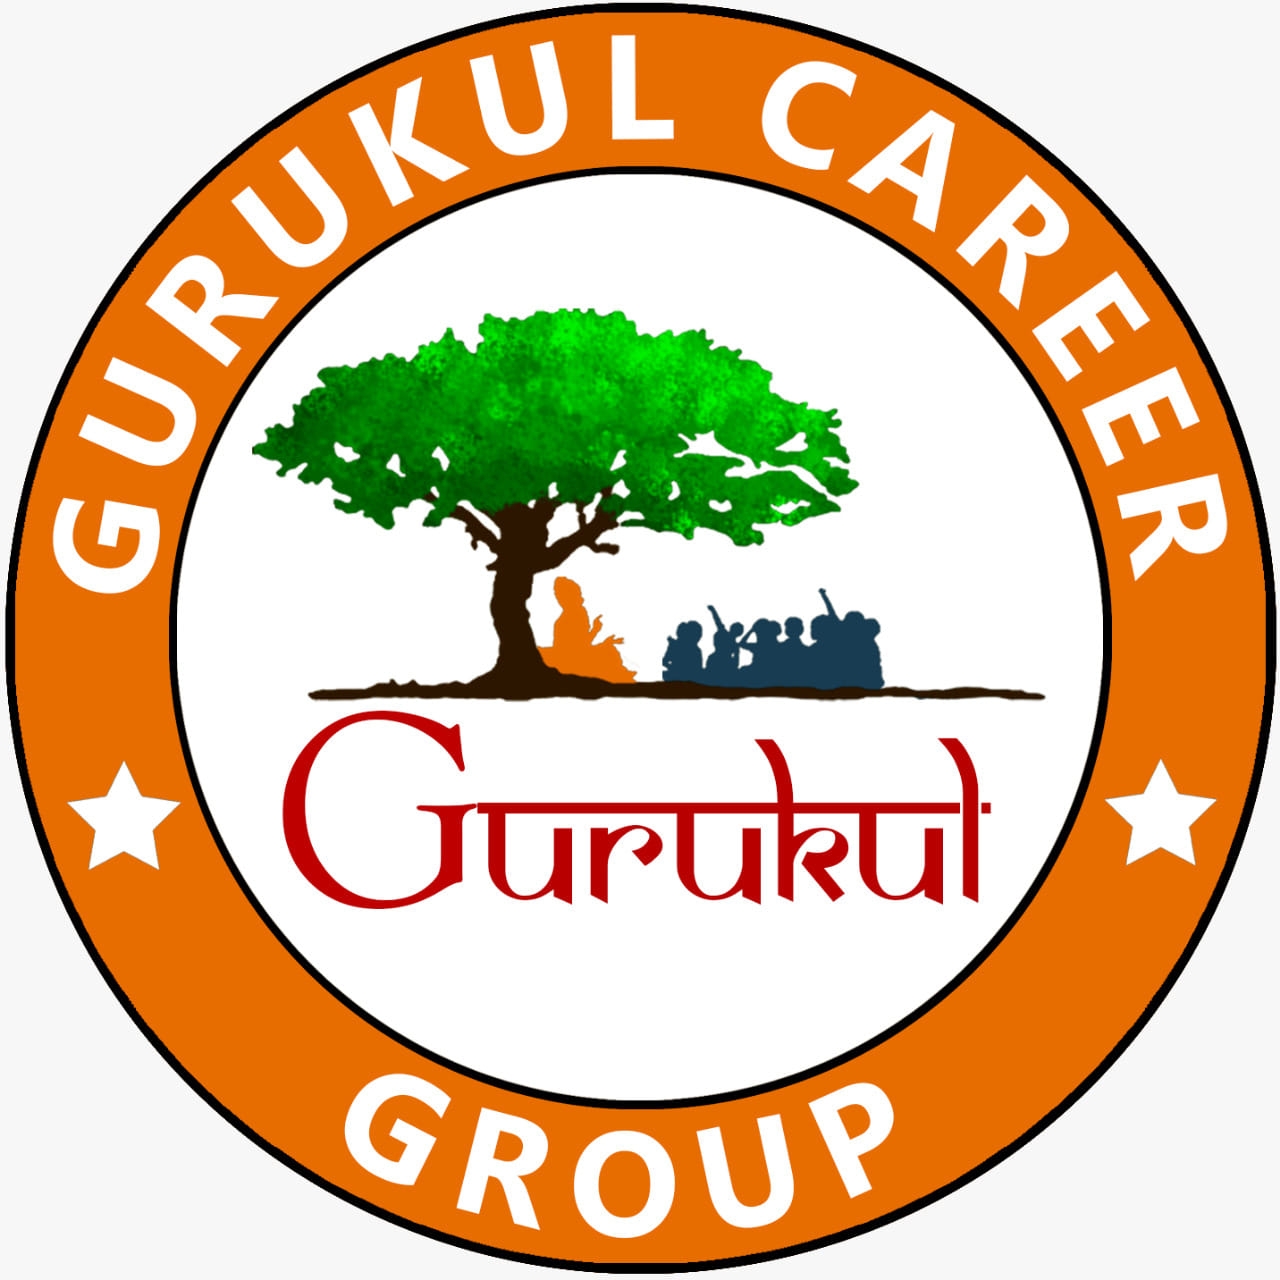 Gurukul Career Group